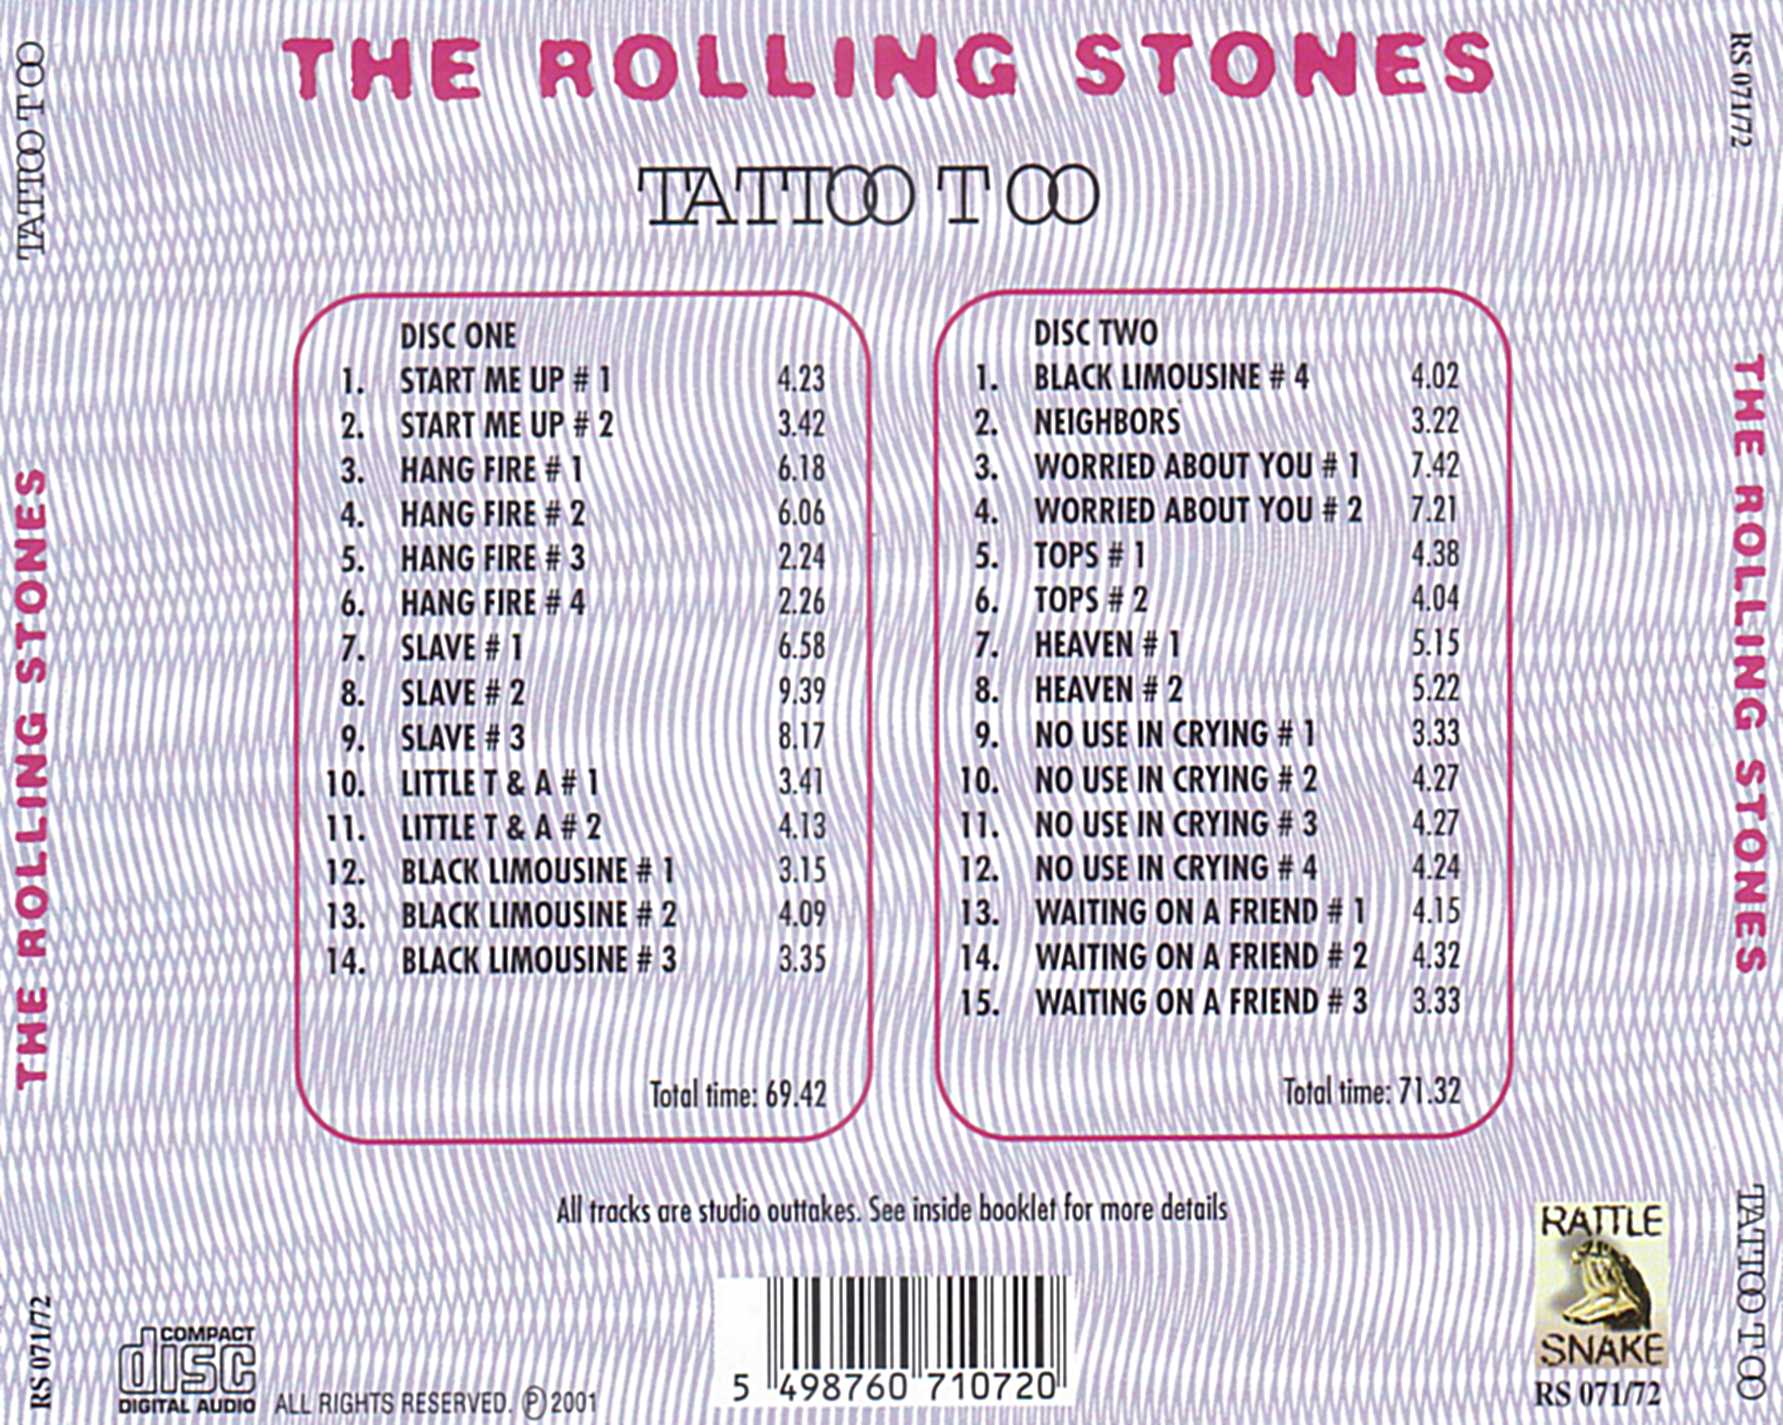 RollingStones1978-03EarlyStitchesTattooYouDemos (1).jpg